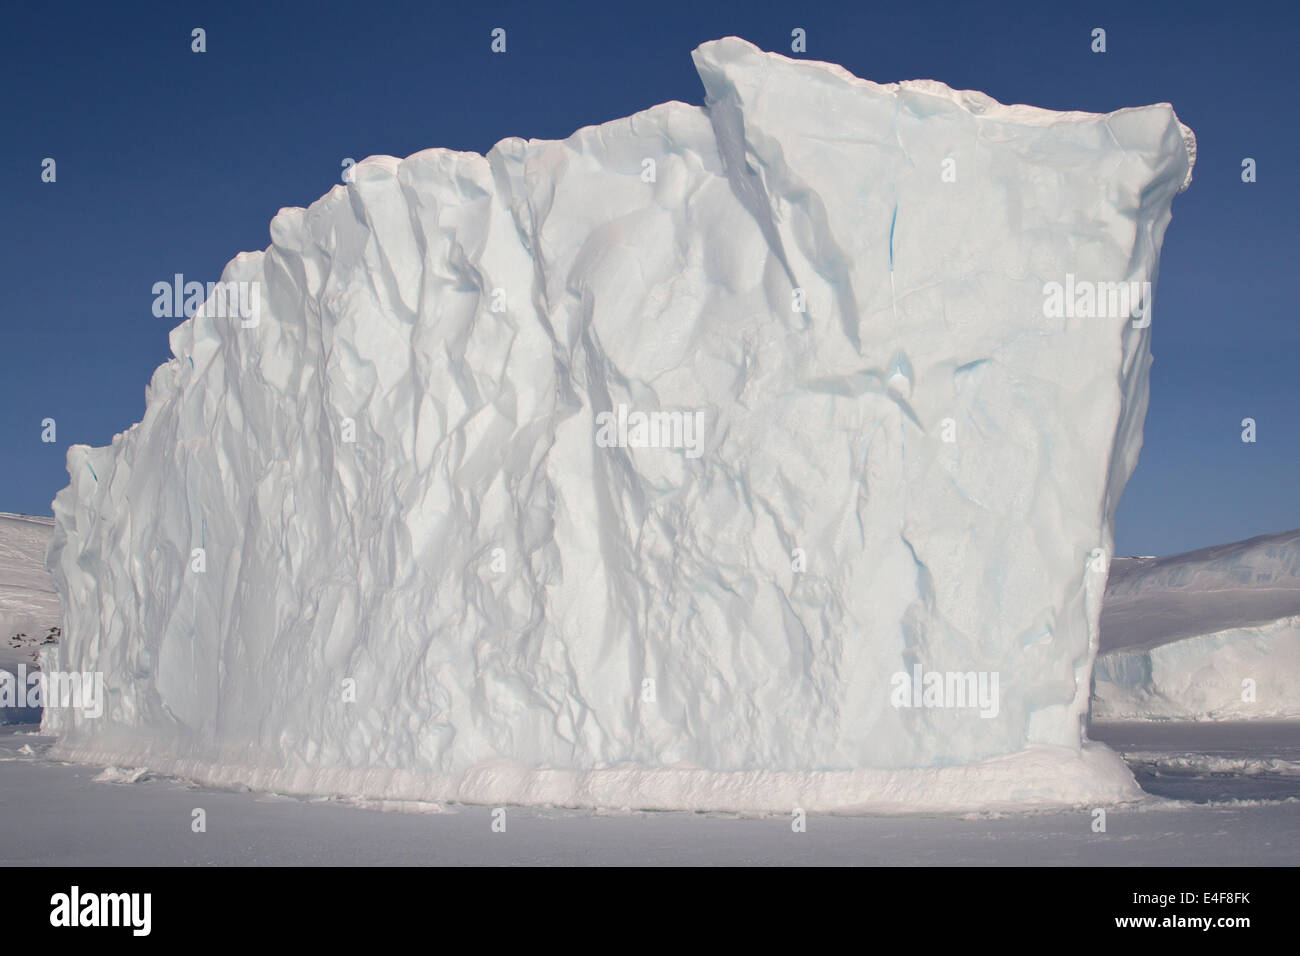 Les icebergs dans l'océan, près de l'îles de l'Antarctique Banque D'Images